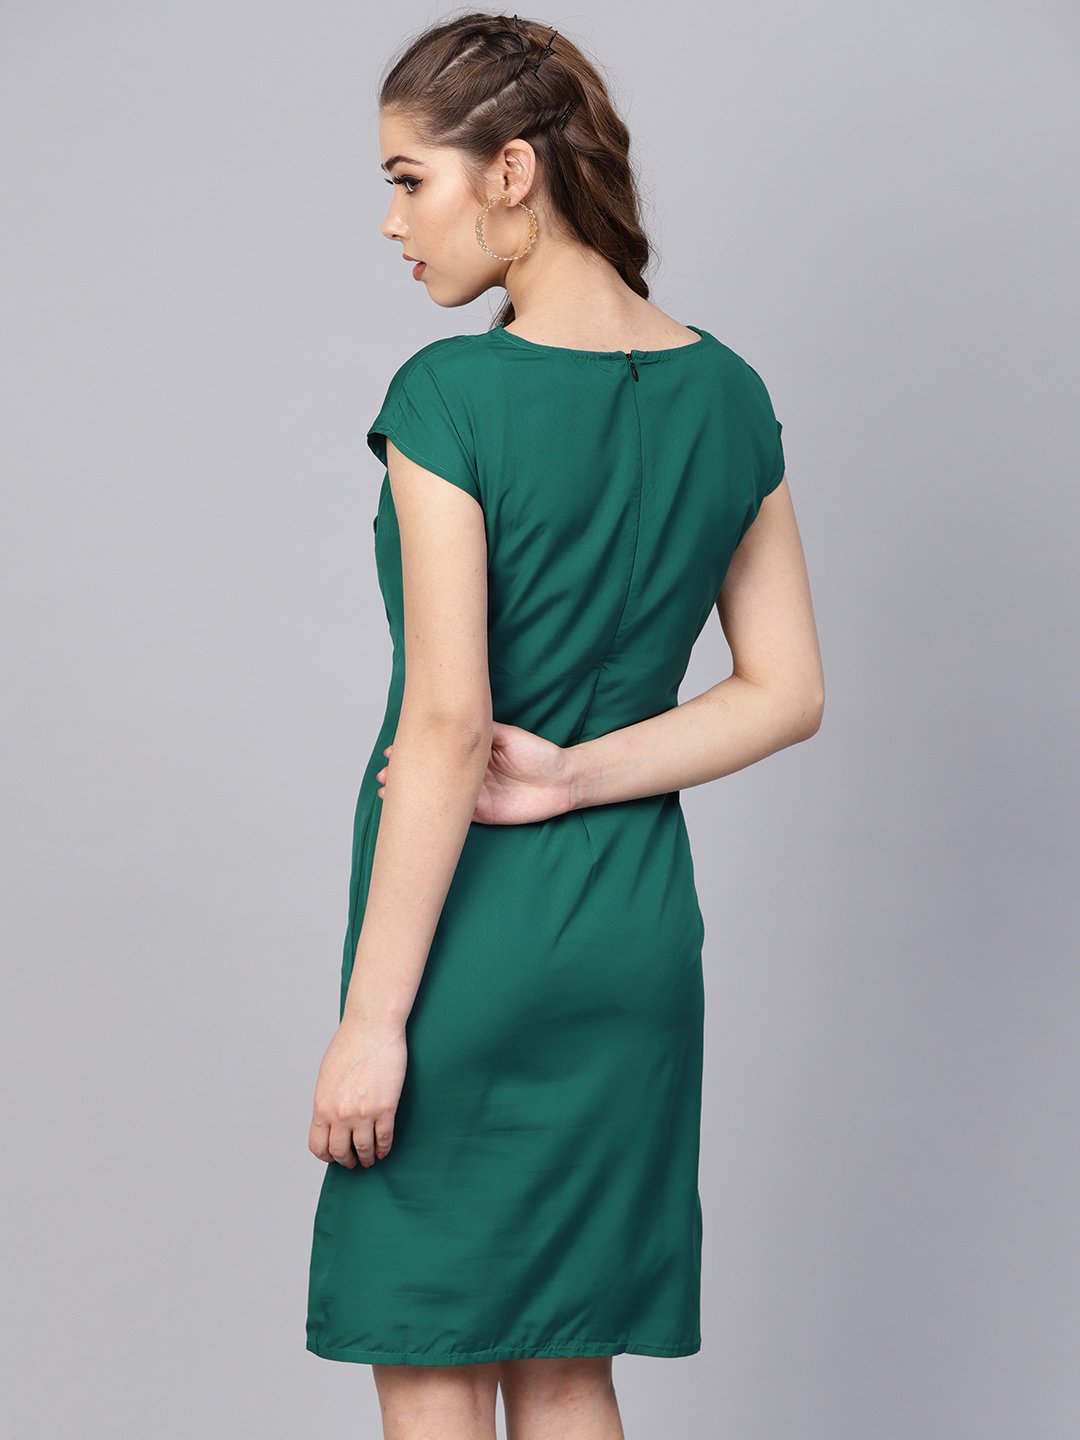 Women's Dark Green Sheath Cap Sleeve Dress - Nayo Clothing